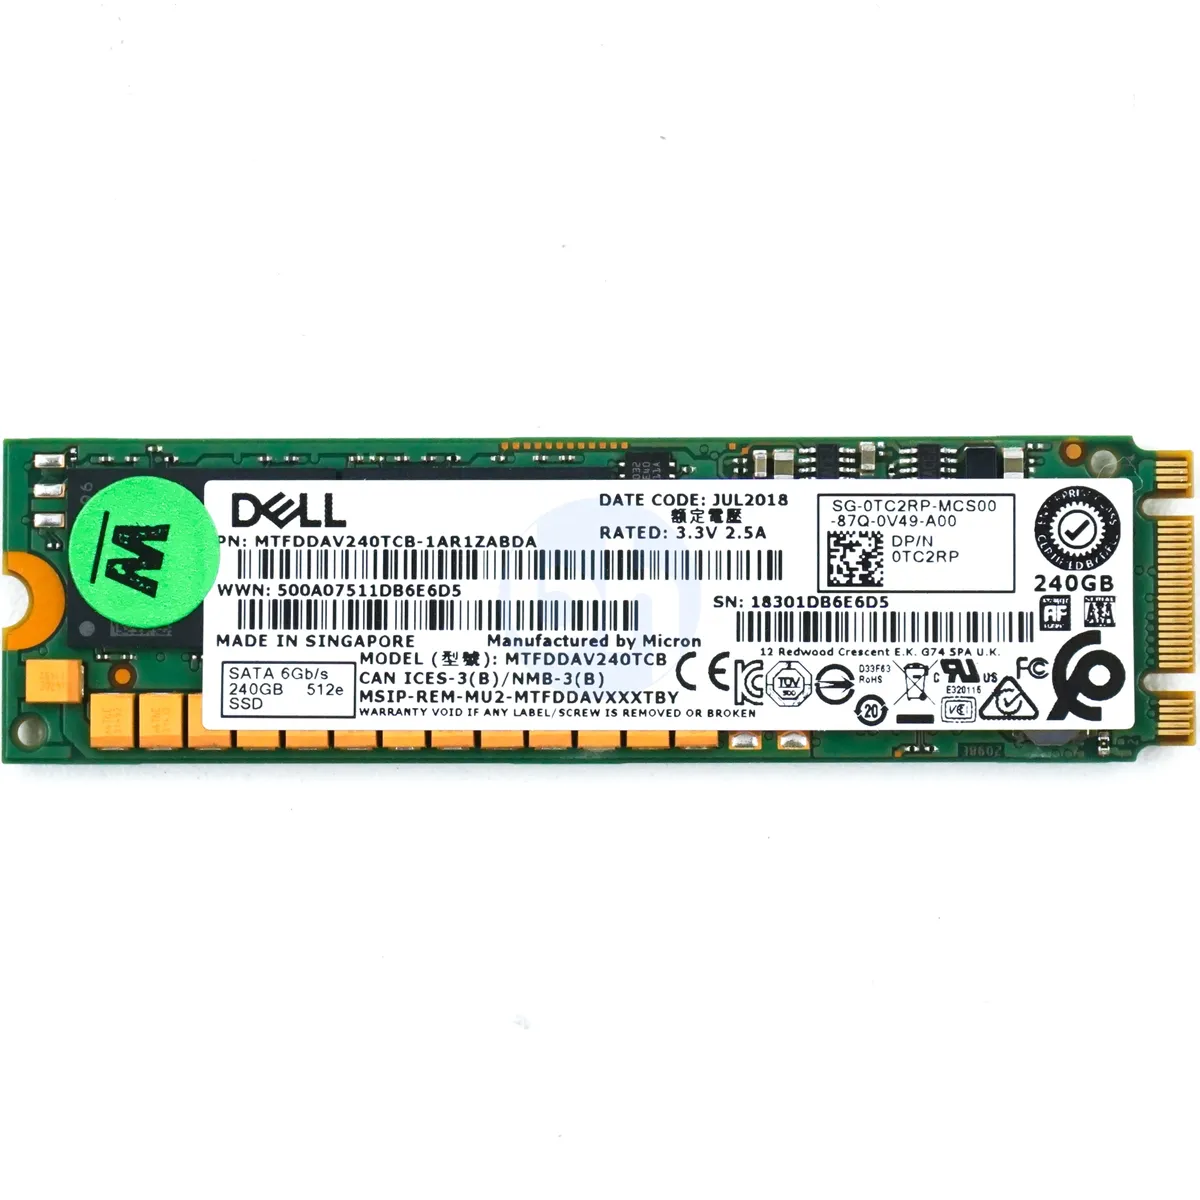 Dell (TC2RP) - 240GB Enterprise Class M.2 2280 B+M SATA 6Gbps SSD